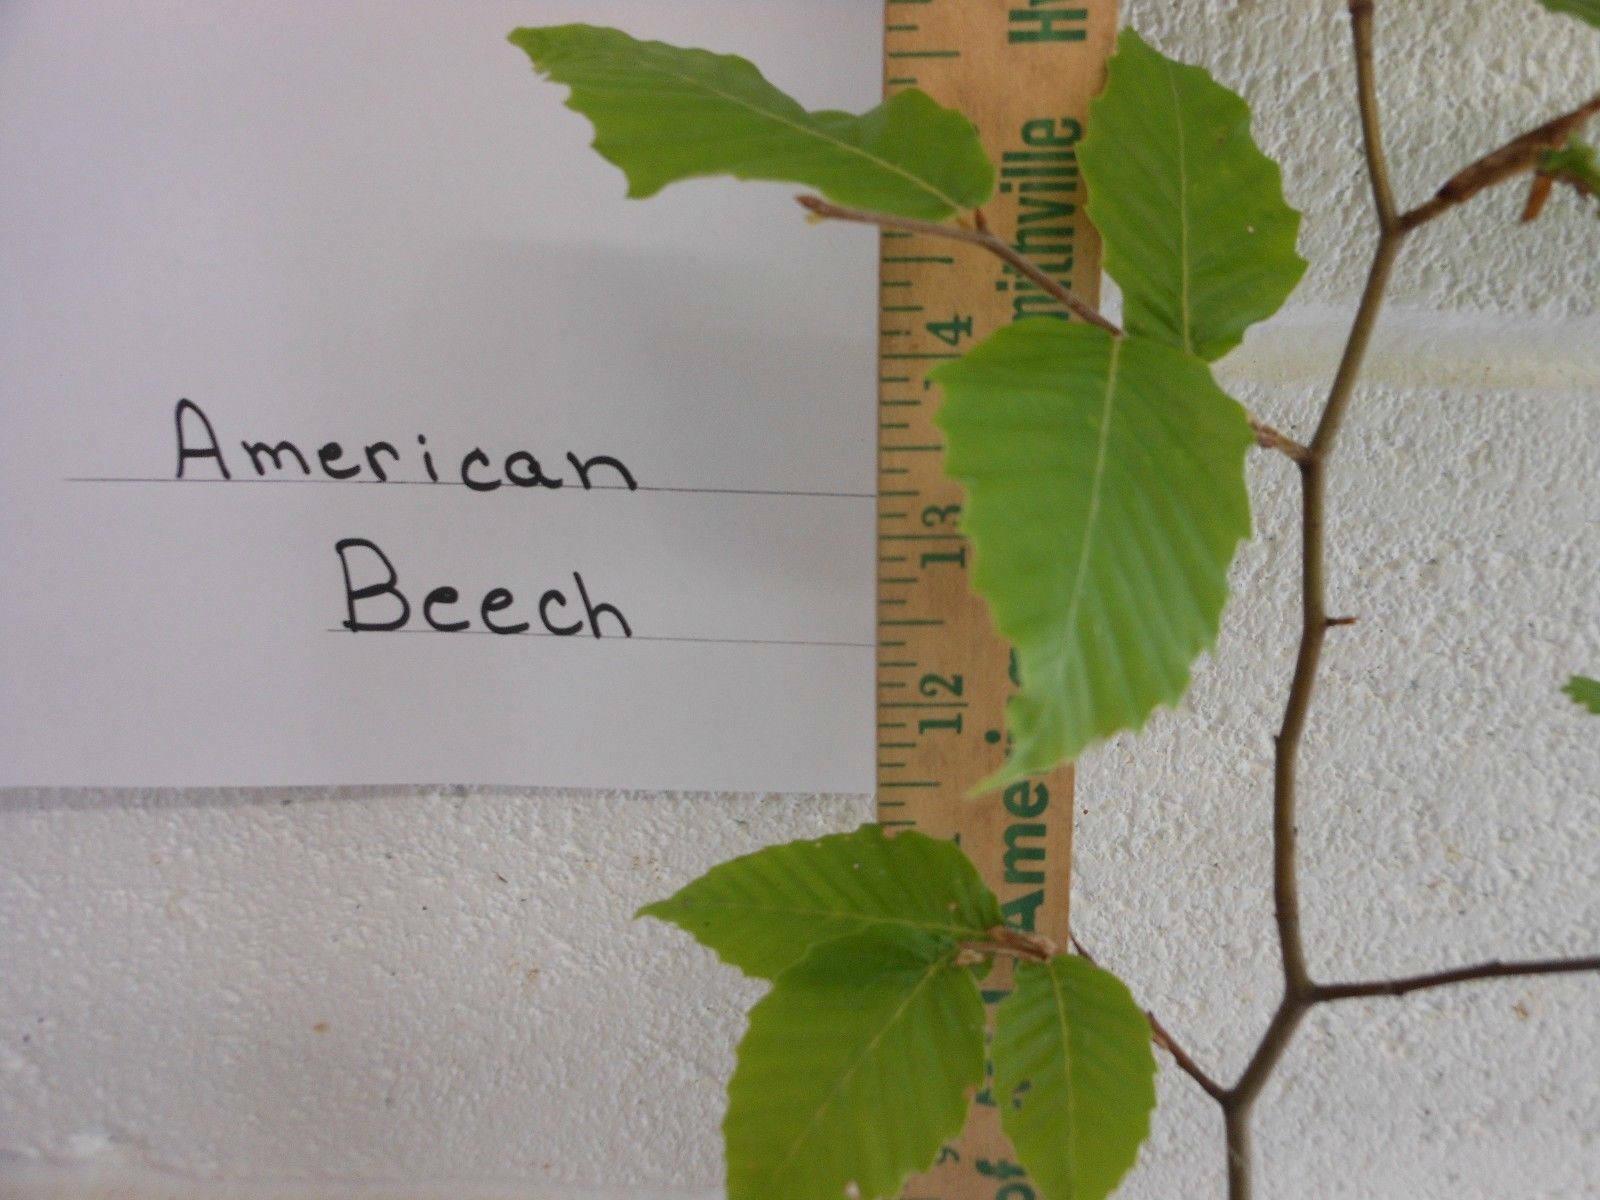 2 American Beech Trees - 6-12" Tall Seedlings - Live Plants - Quart Pots - Fagus grandifolia - The Nursery Center